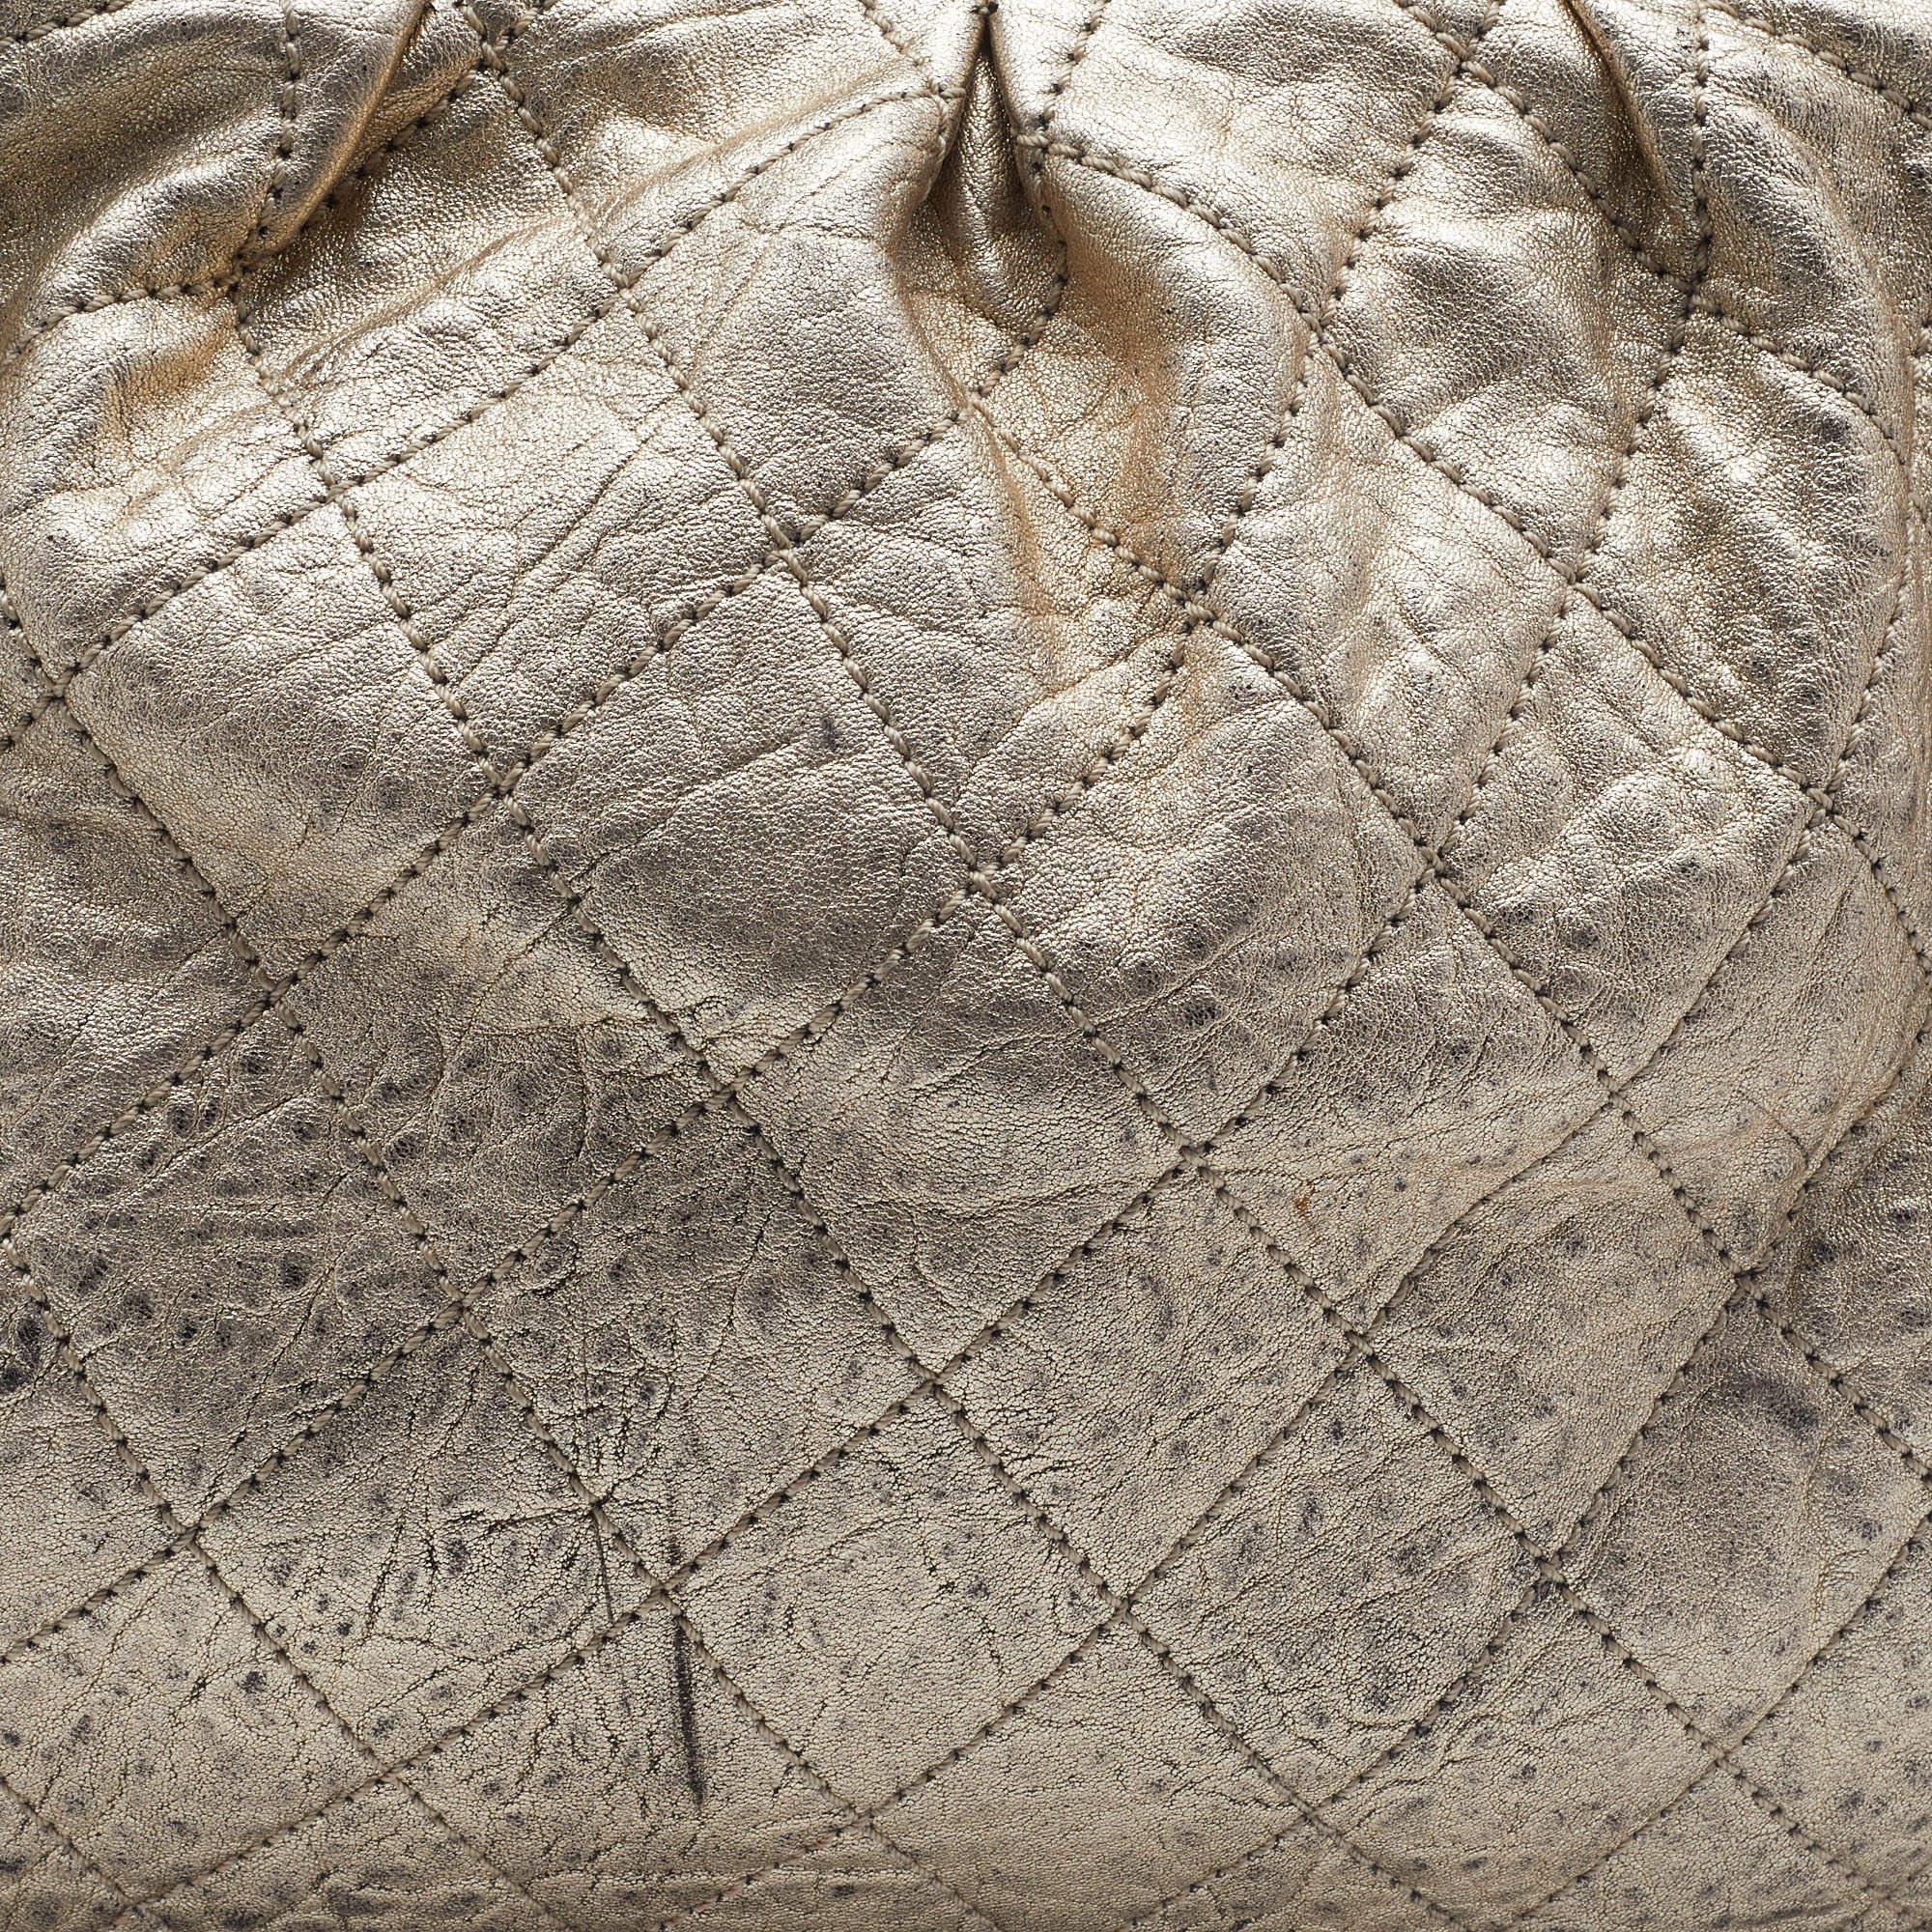 Chanel Gold Textured Leather Wild Stich Weekender Bag 1